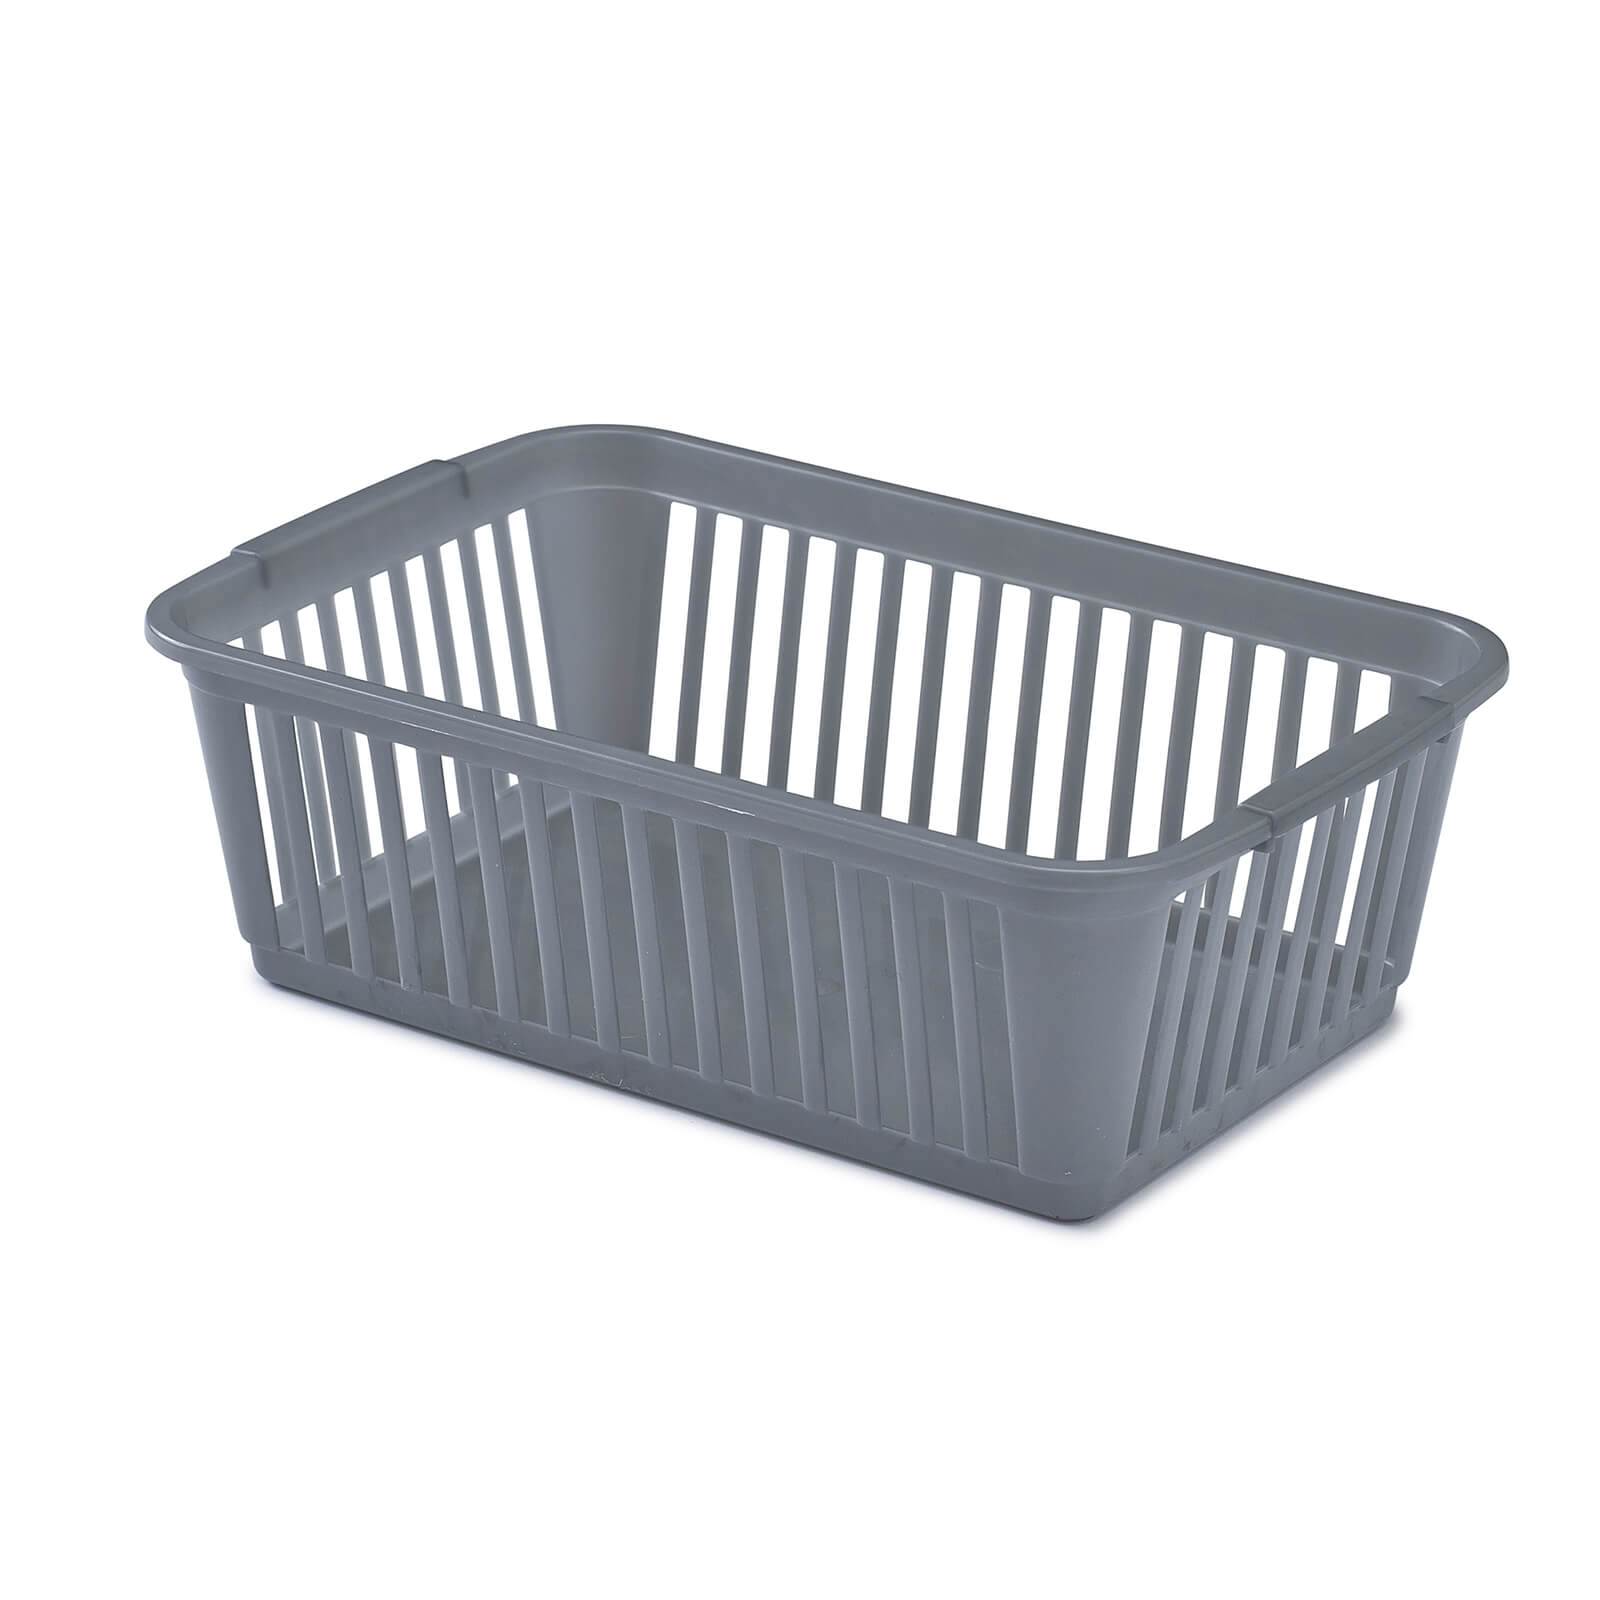 25cm Handy Basket - Silver - 3 Pack